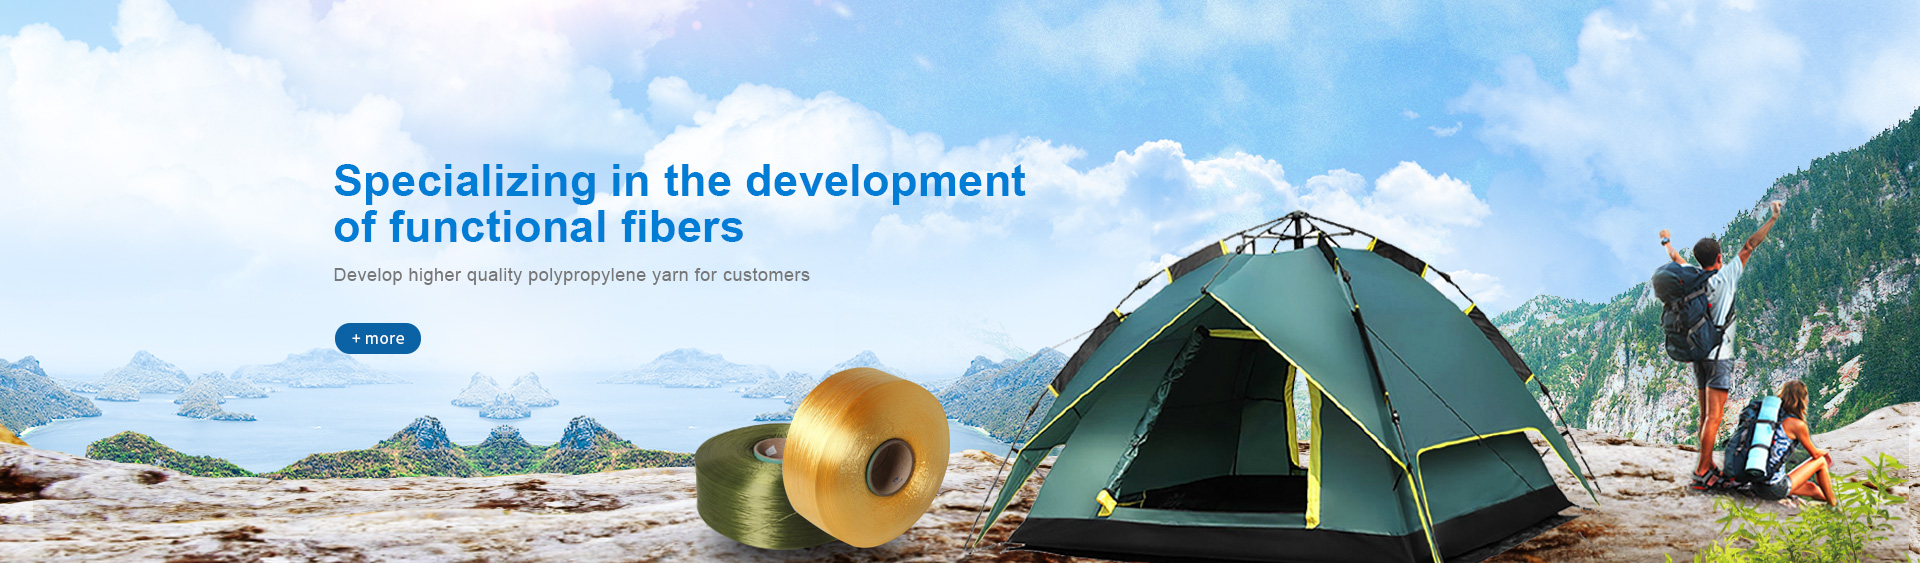 Jinjiang Deke Textile Co., Ltd. official site| Home| Polypropylene reclaimed yarn| polypropylene hollow yarn| pp yarn, polypropylene light body yarn| polypropylene yarn